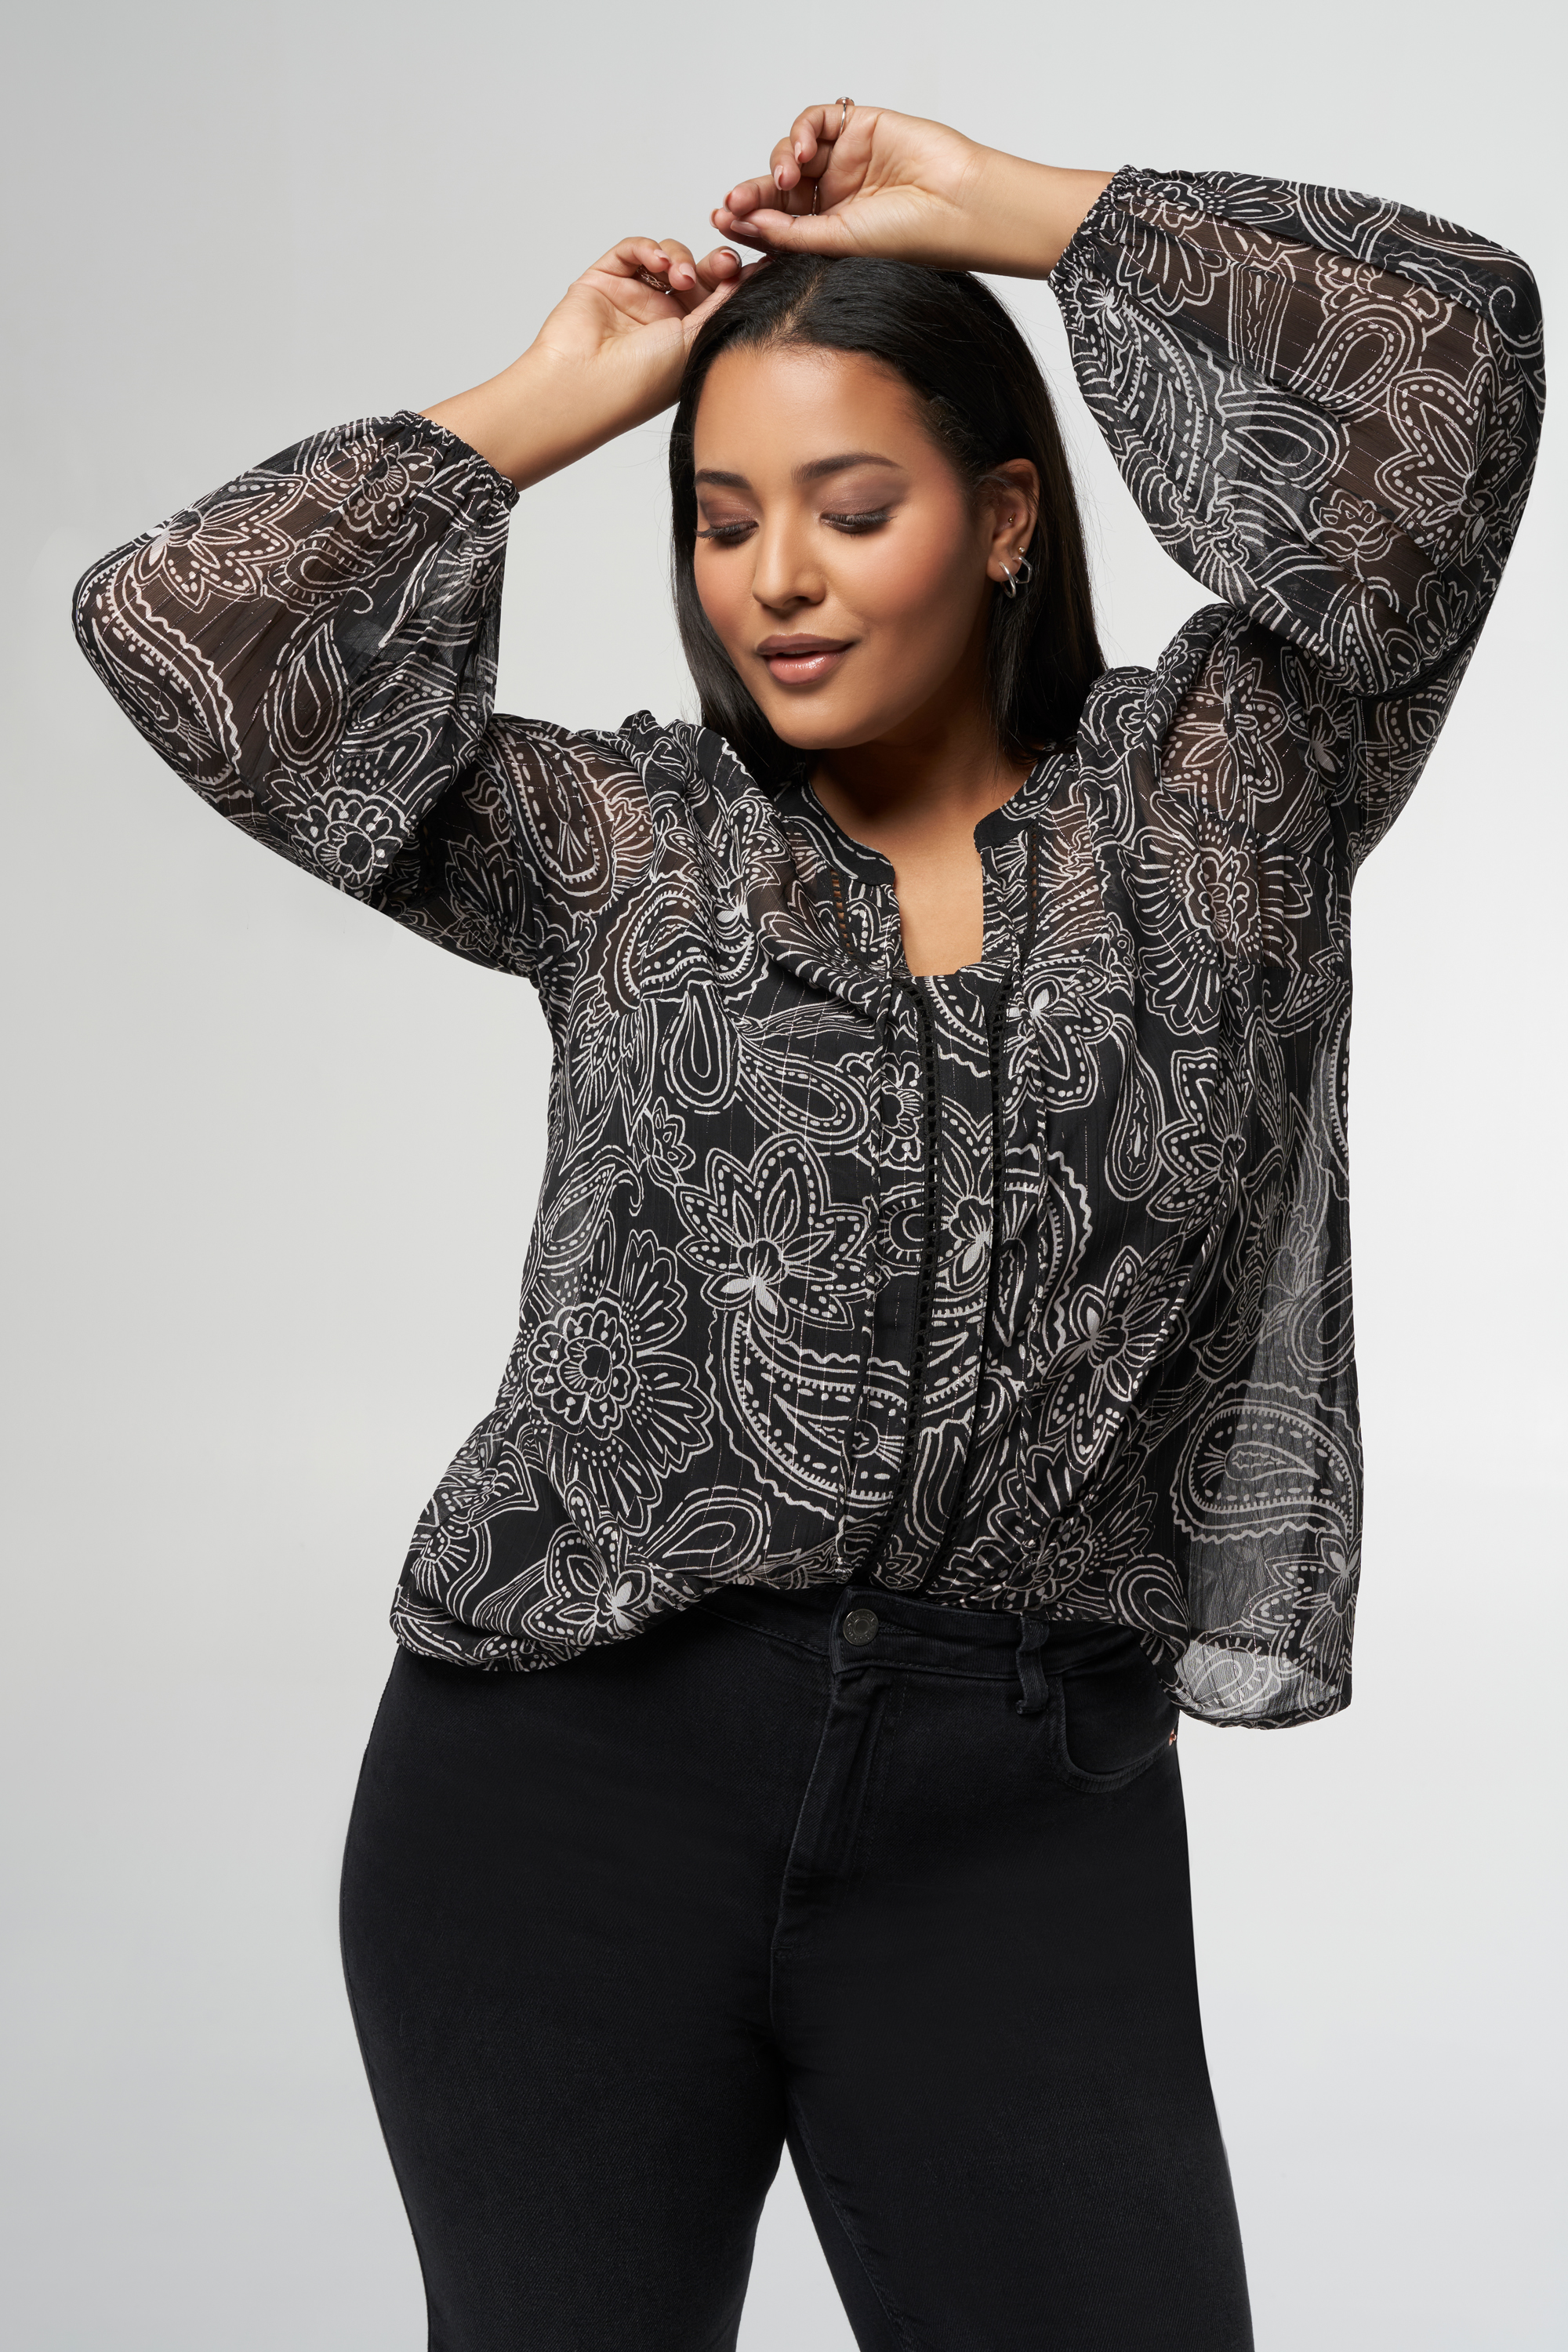 Damen Bluse mit | Multi schwarz-weiss MS Paisley-Print Mode